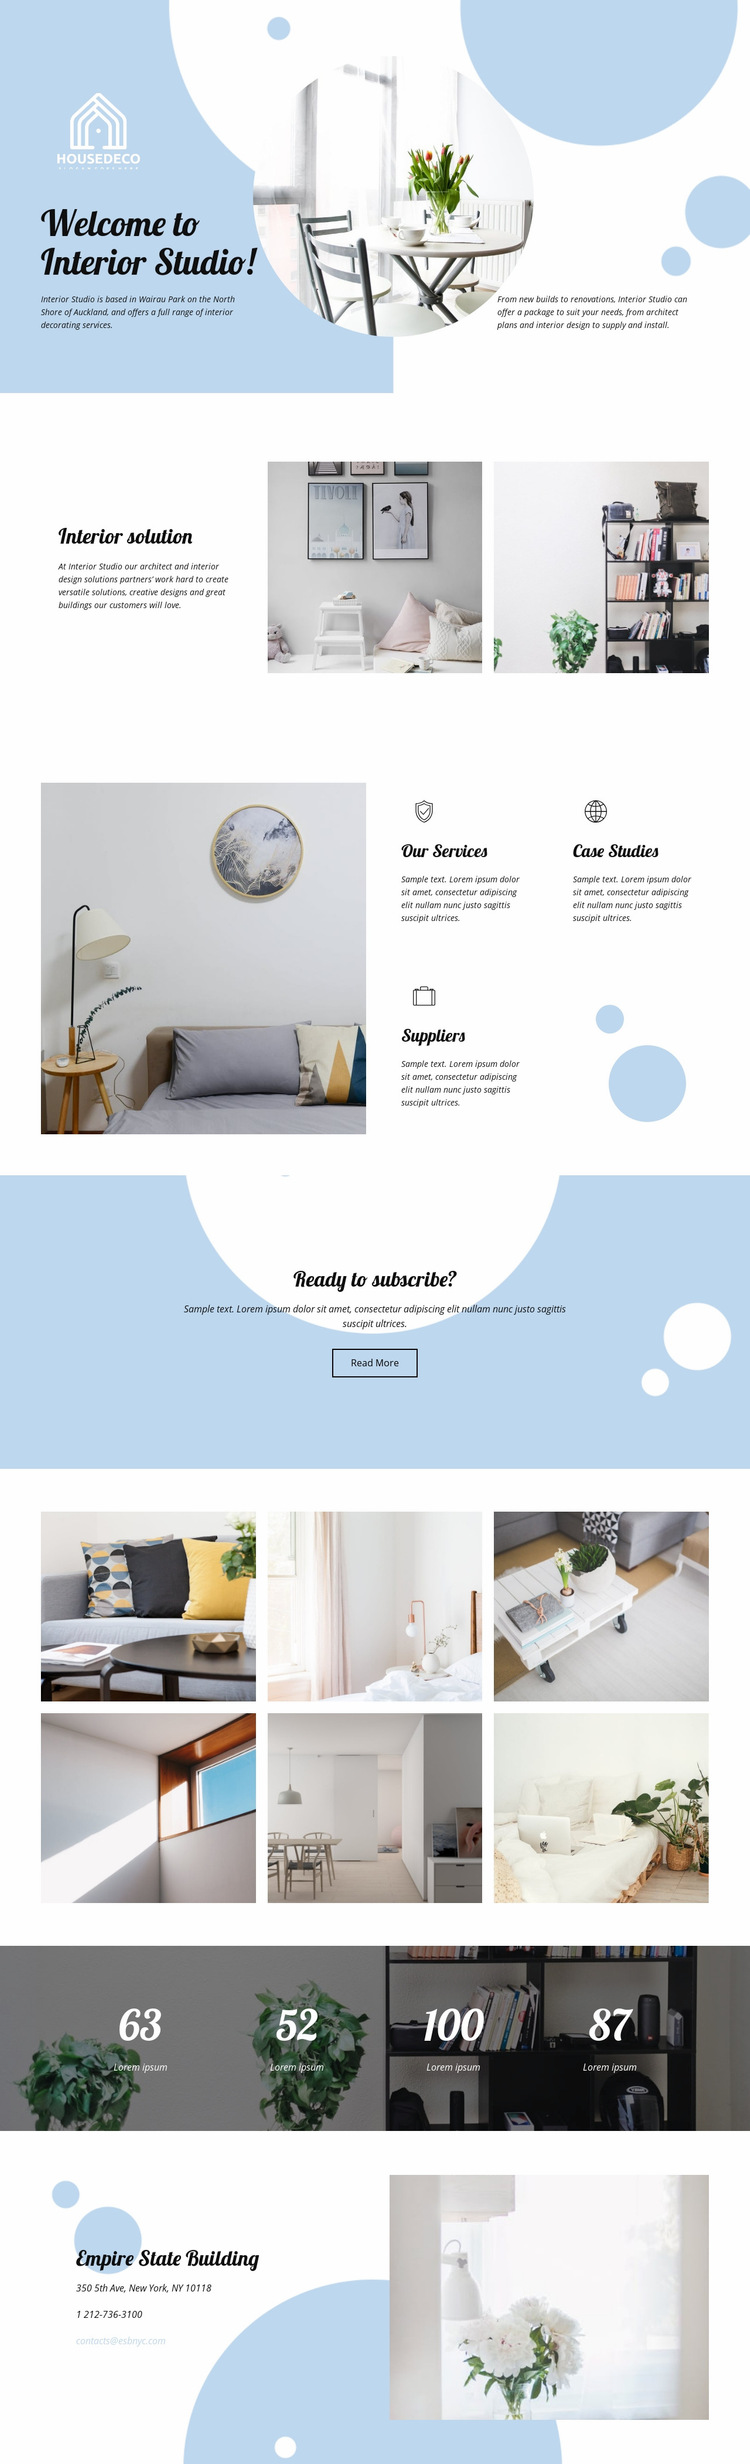 Interior Studio Web Page Design